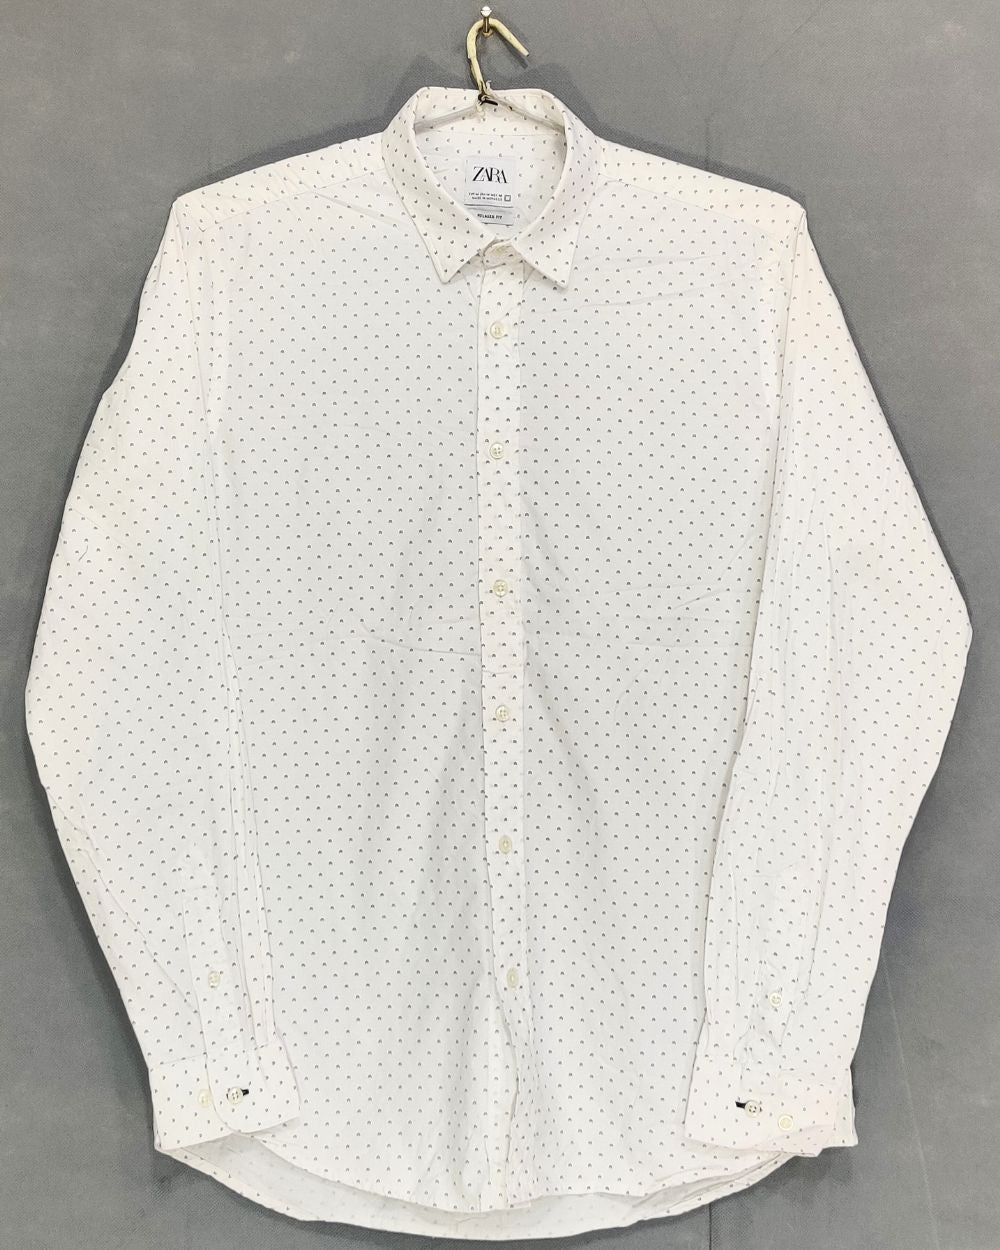 Zara Branded Original Cotton Shirt For Men